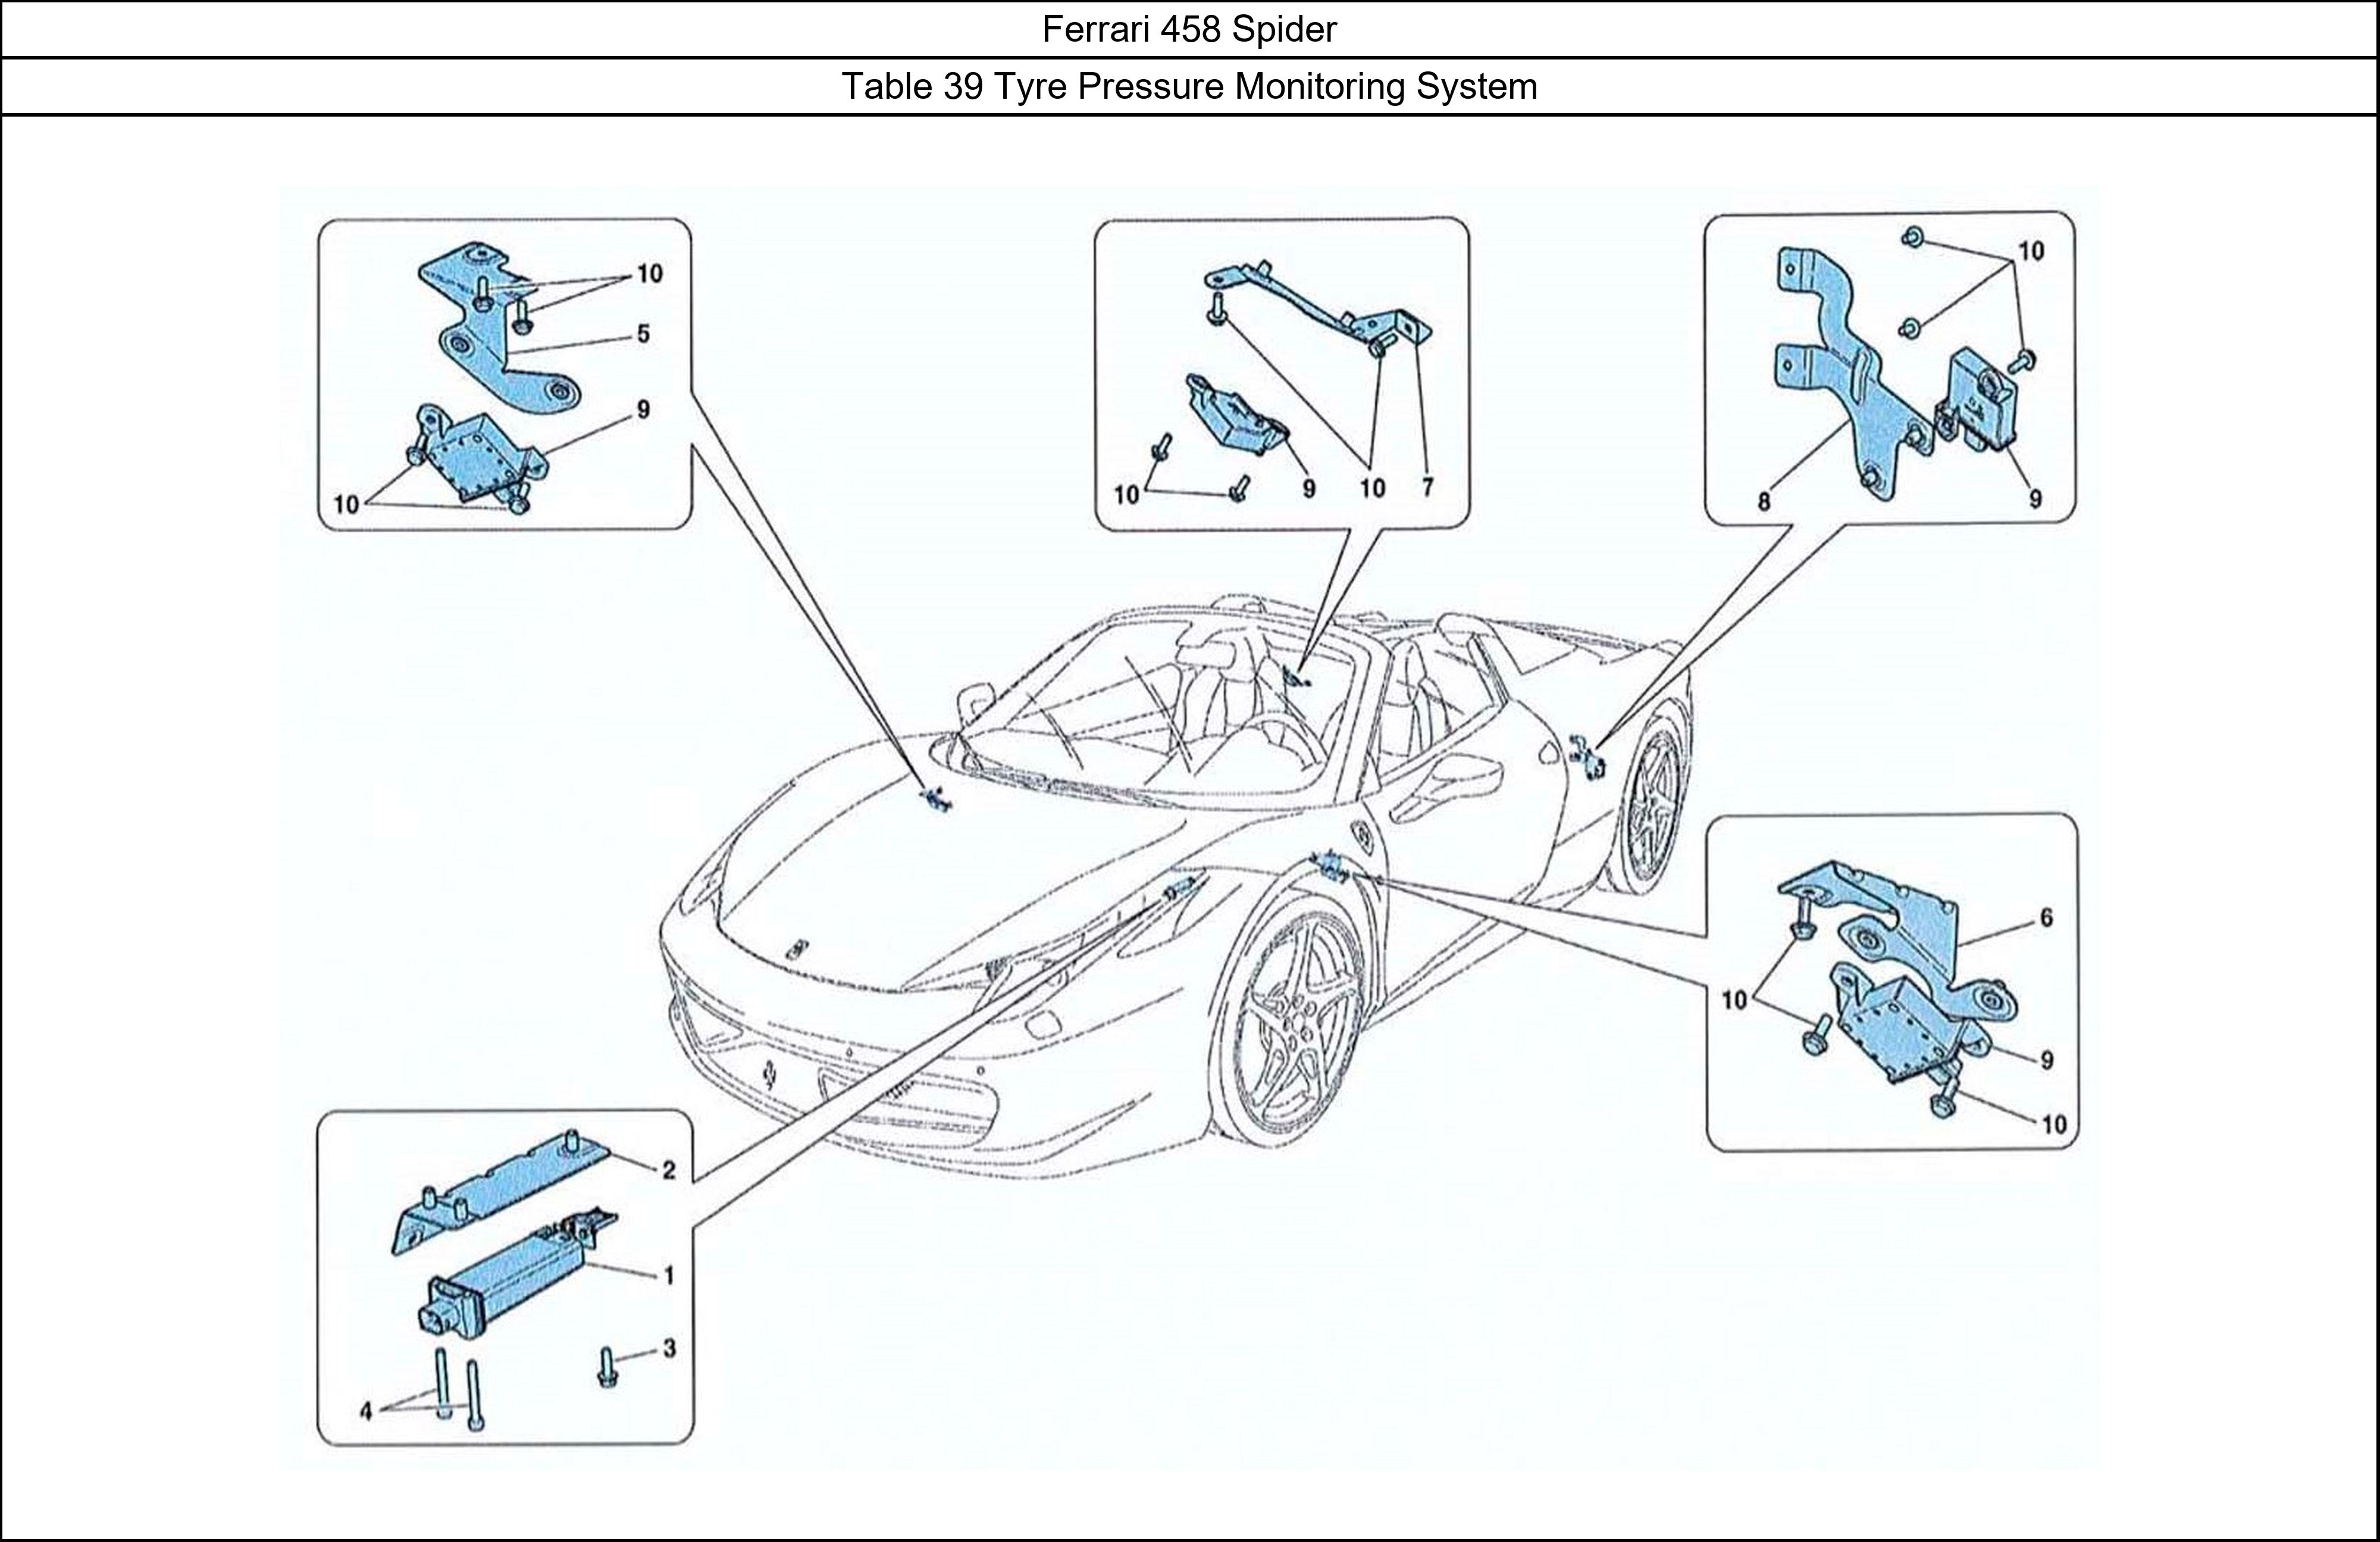 Ferrari Parts Ferrari 458 Spider Table 39 Tyre Pressure Monitoring System